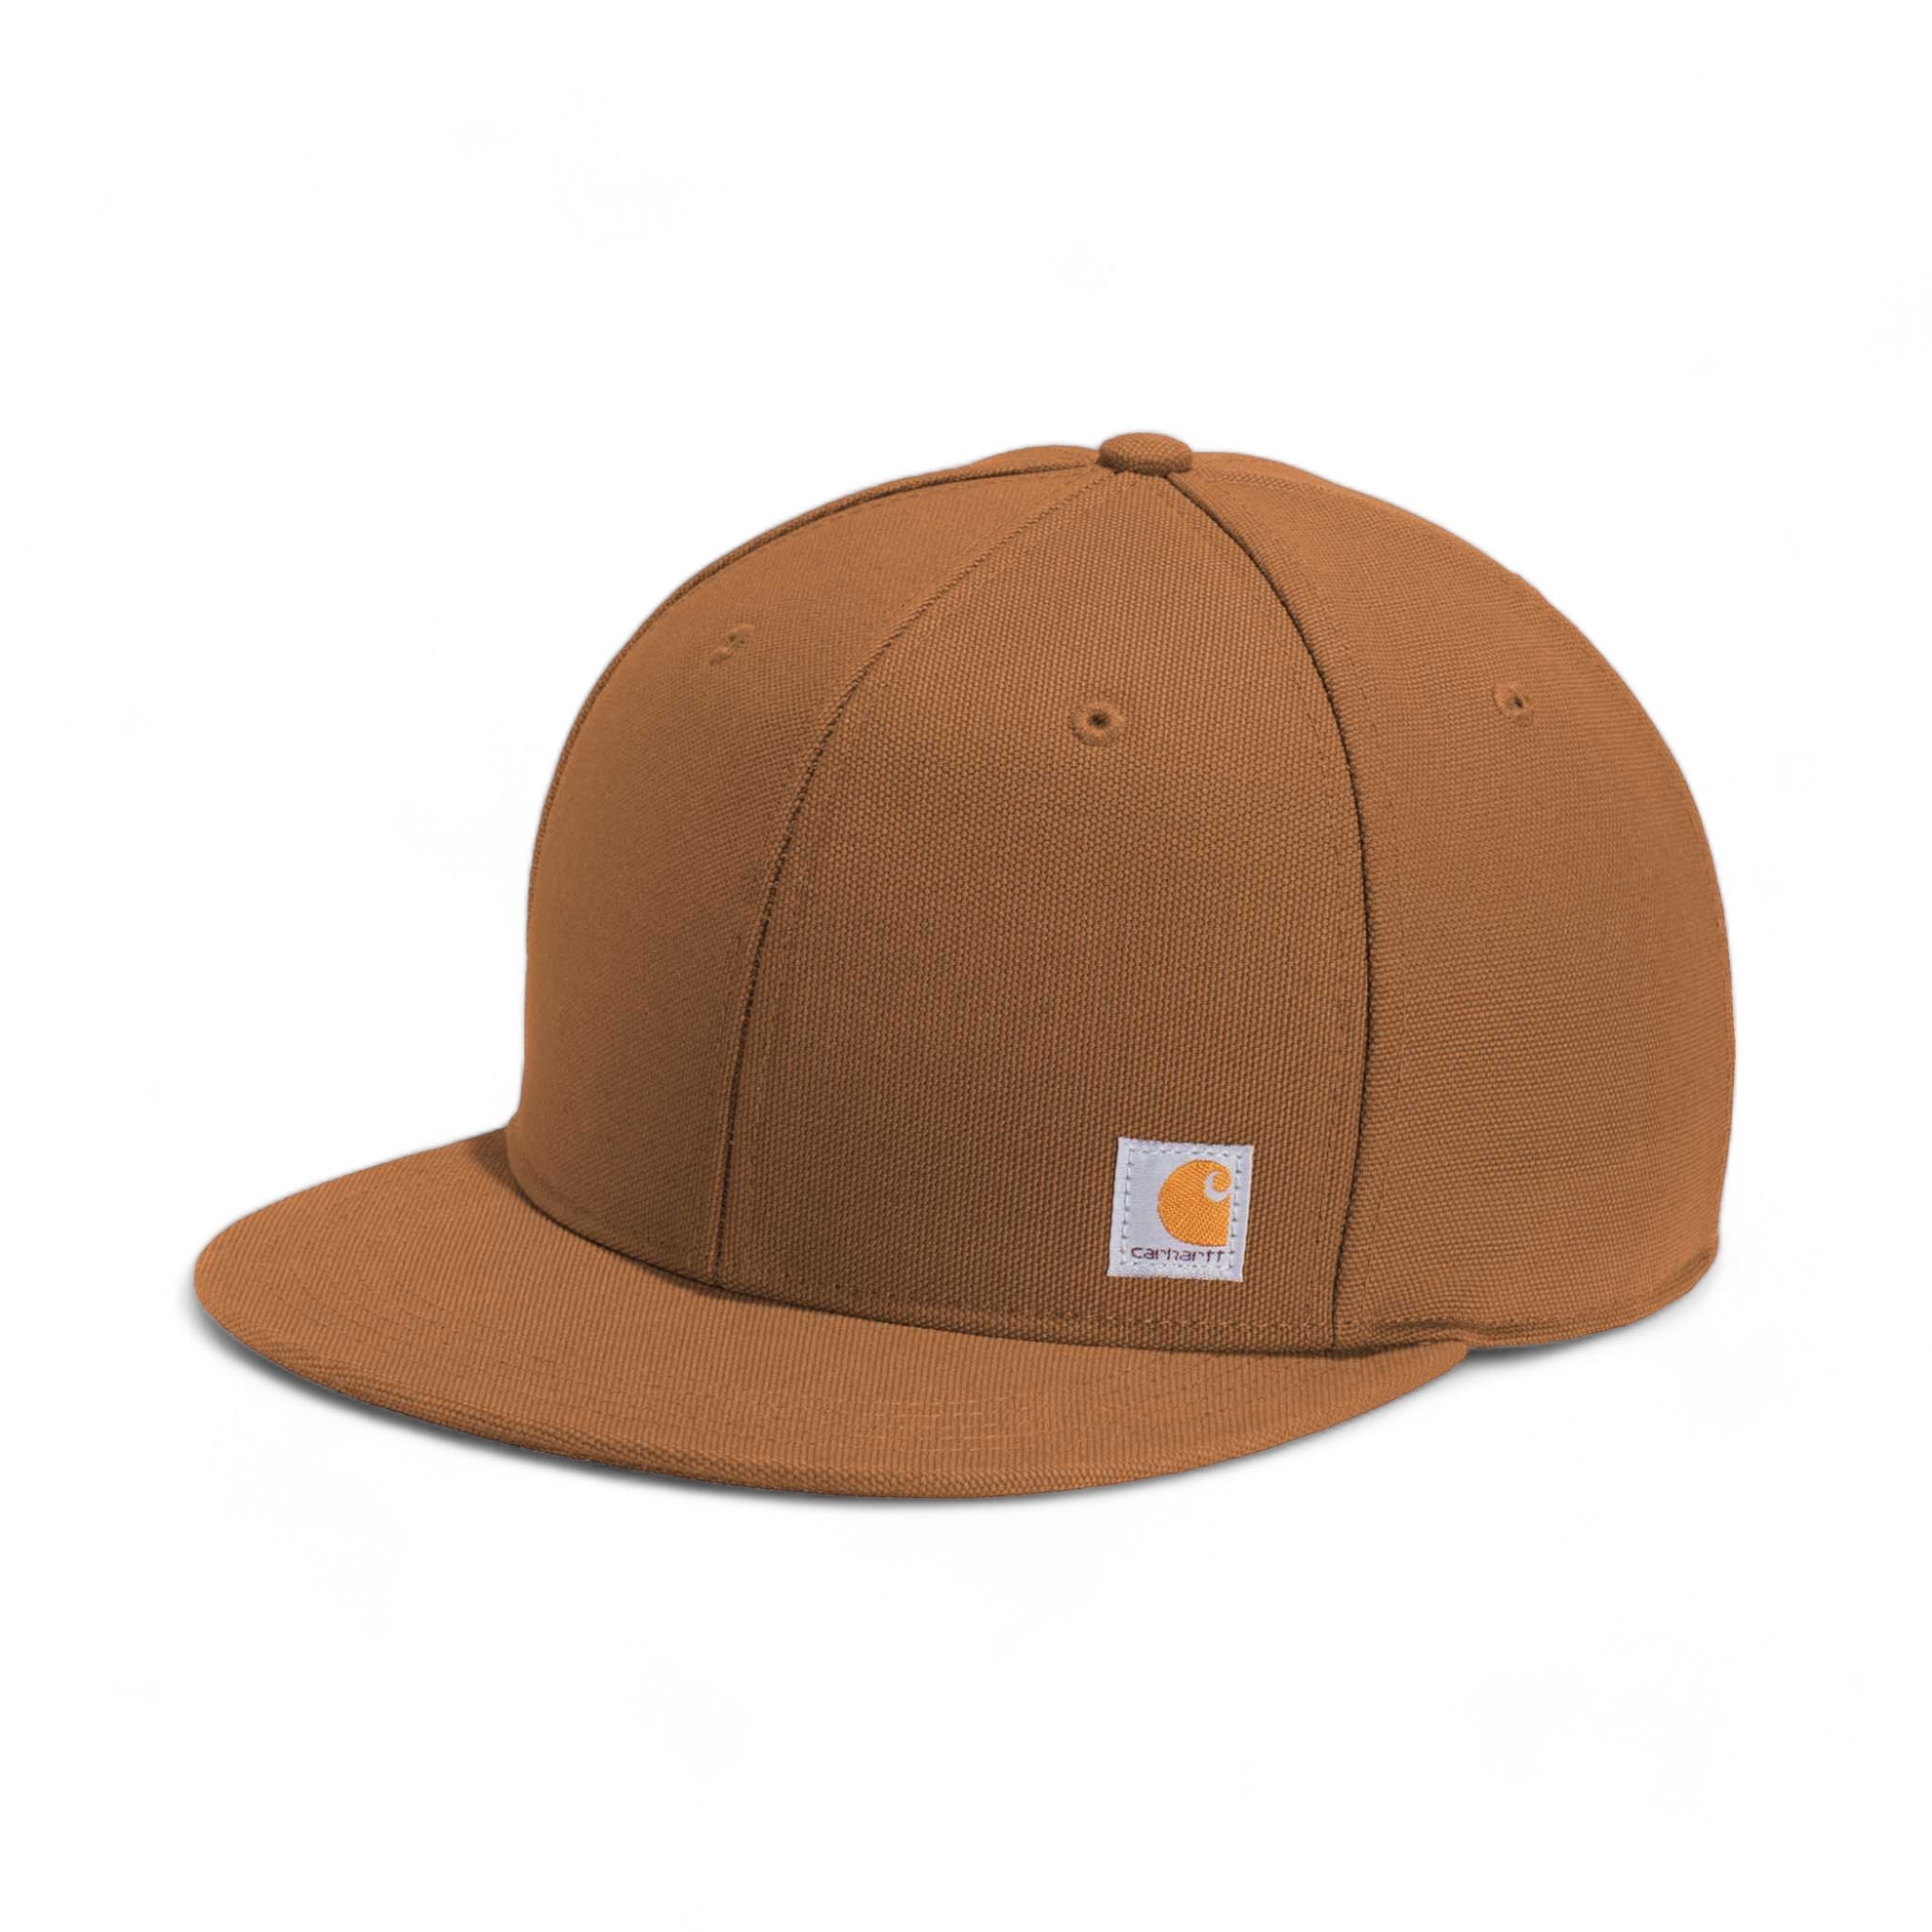 Side view of Carthartt CT101604 custom hat in carhartt brown